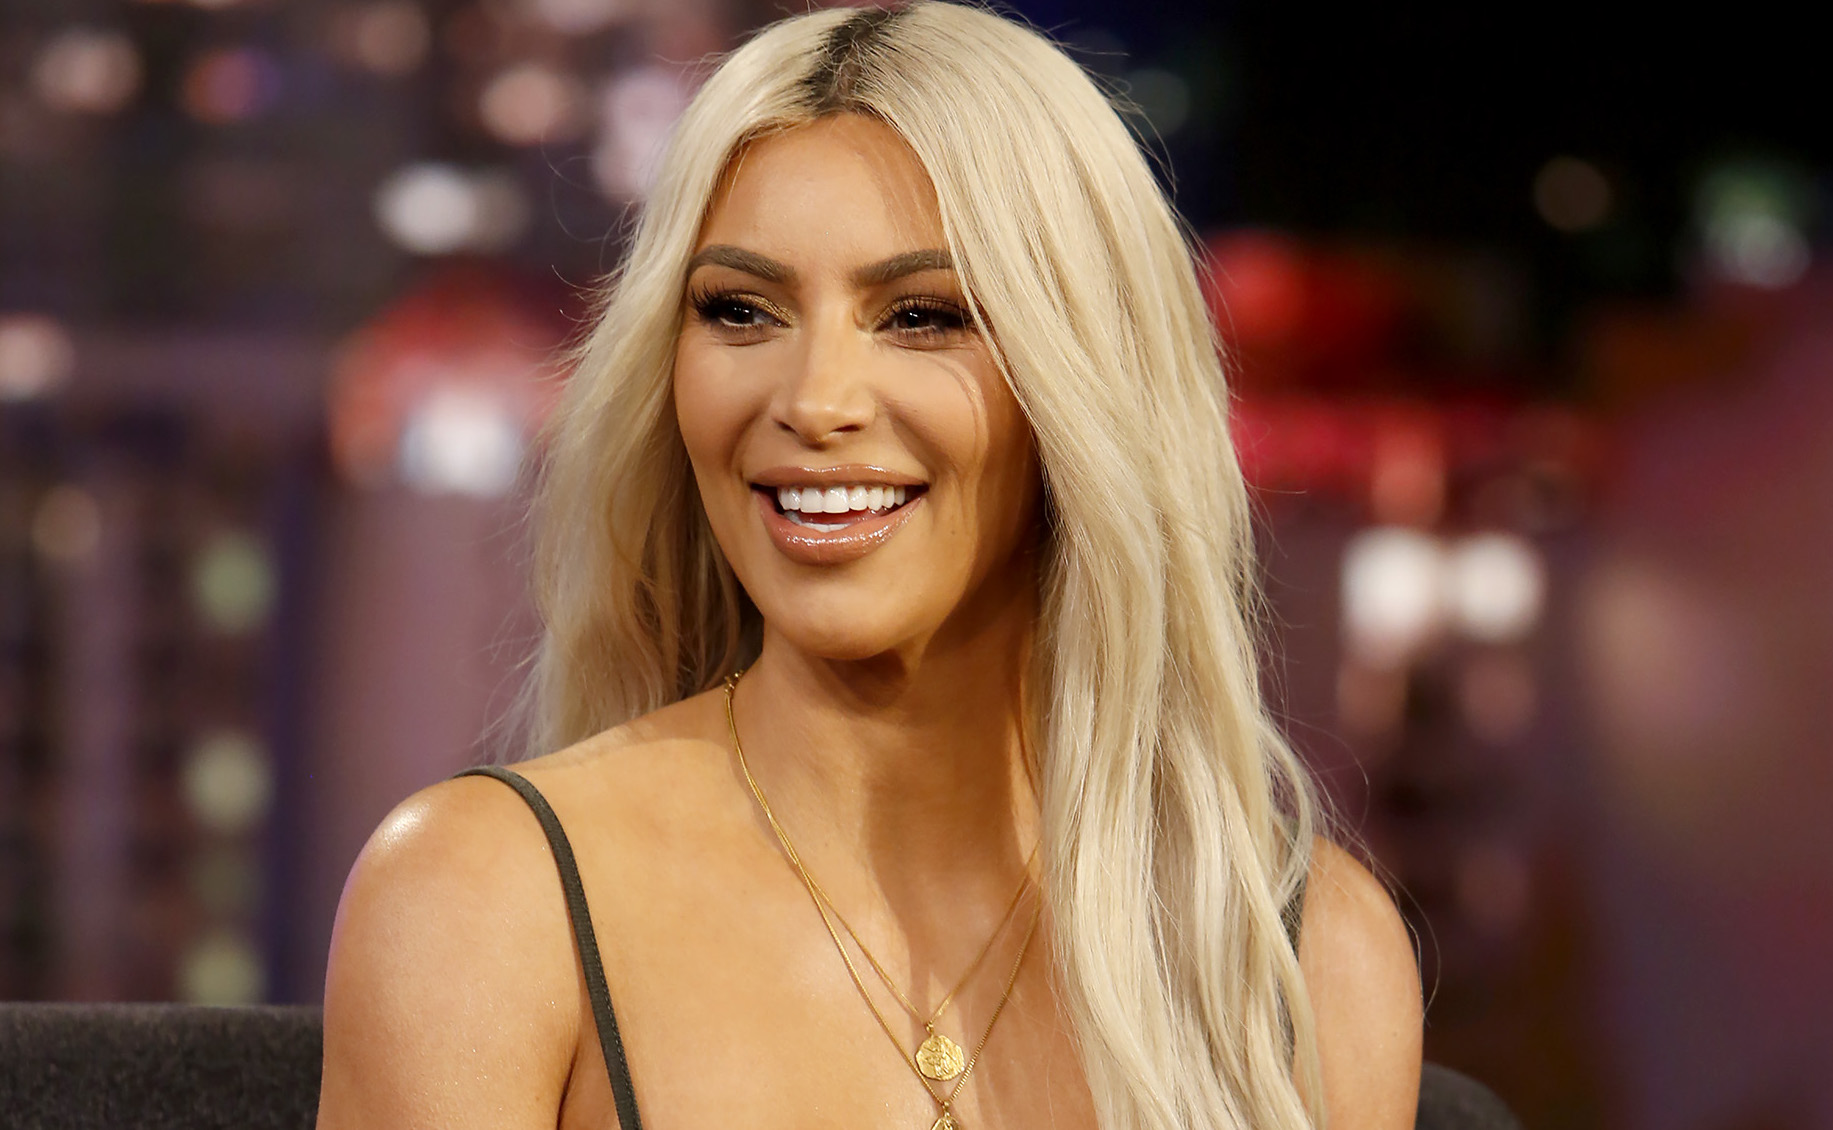 Amateur Blowjob Kim Kardashian - Kim Kardashian's Waist Looks Smaller Than Ever in Latest Pic